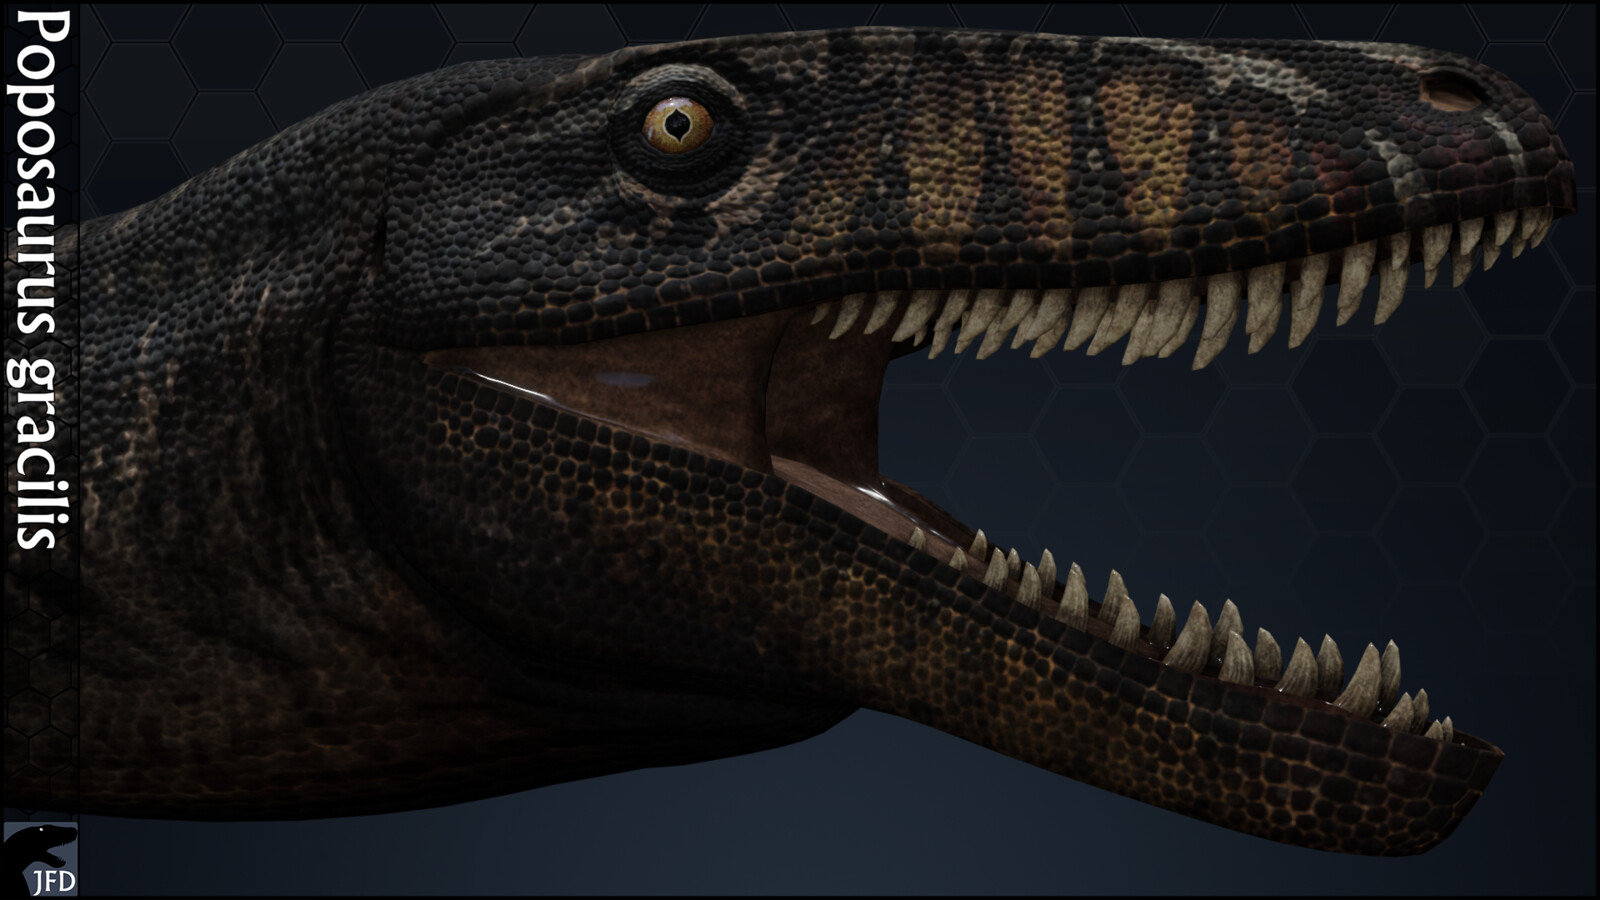 Poposaurus gracilis head render.